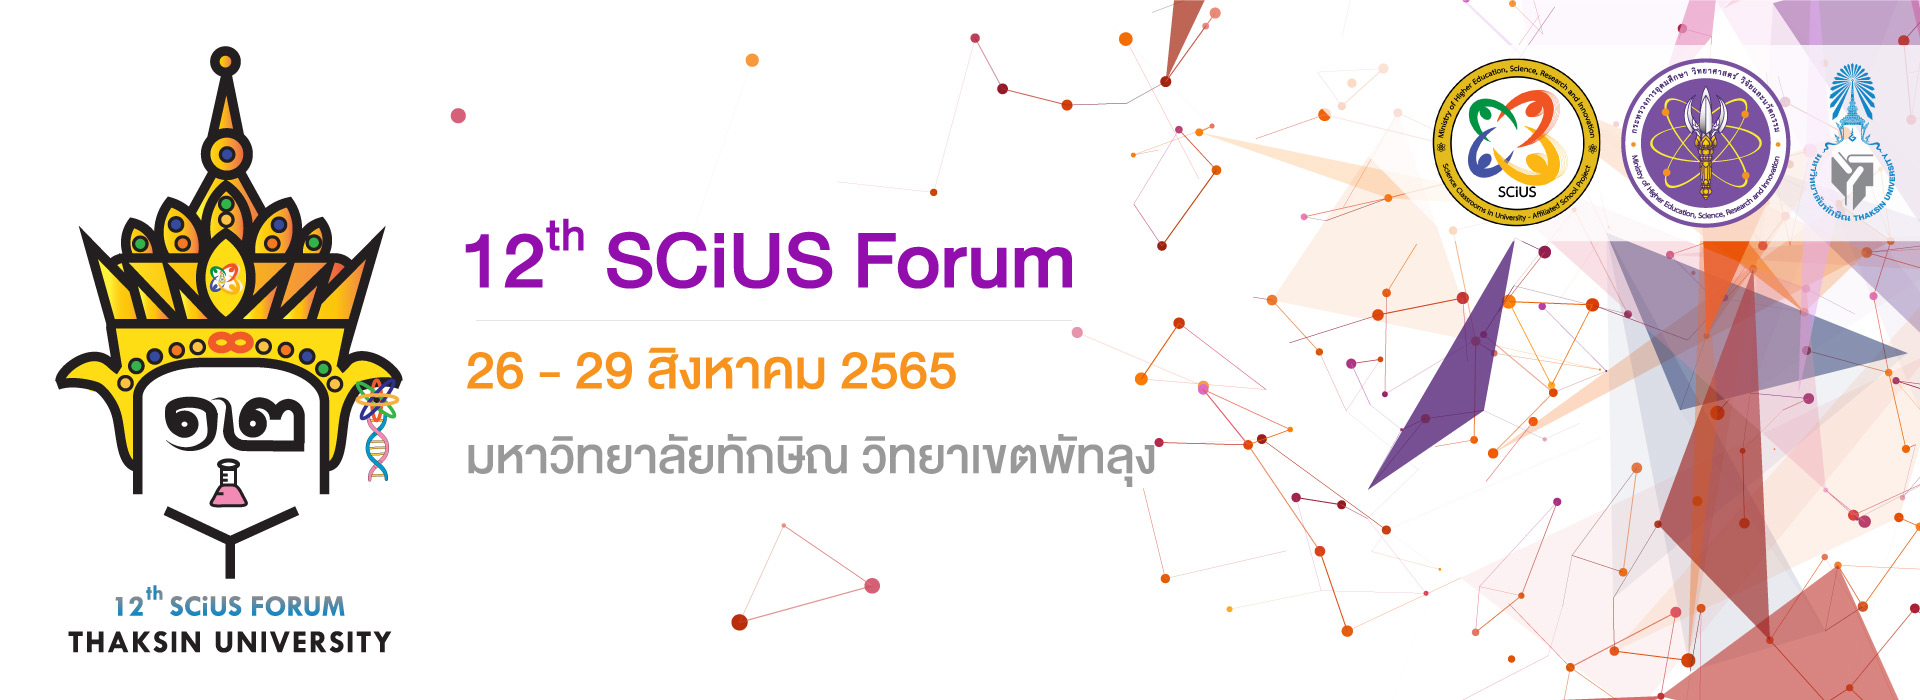 SCiUS Forum ครั้งที่ 12